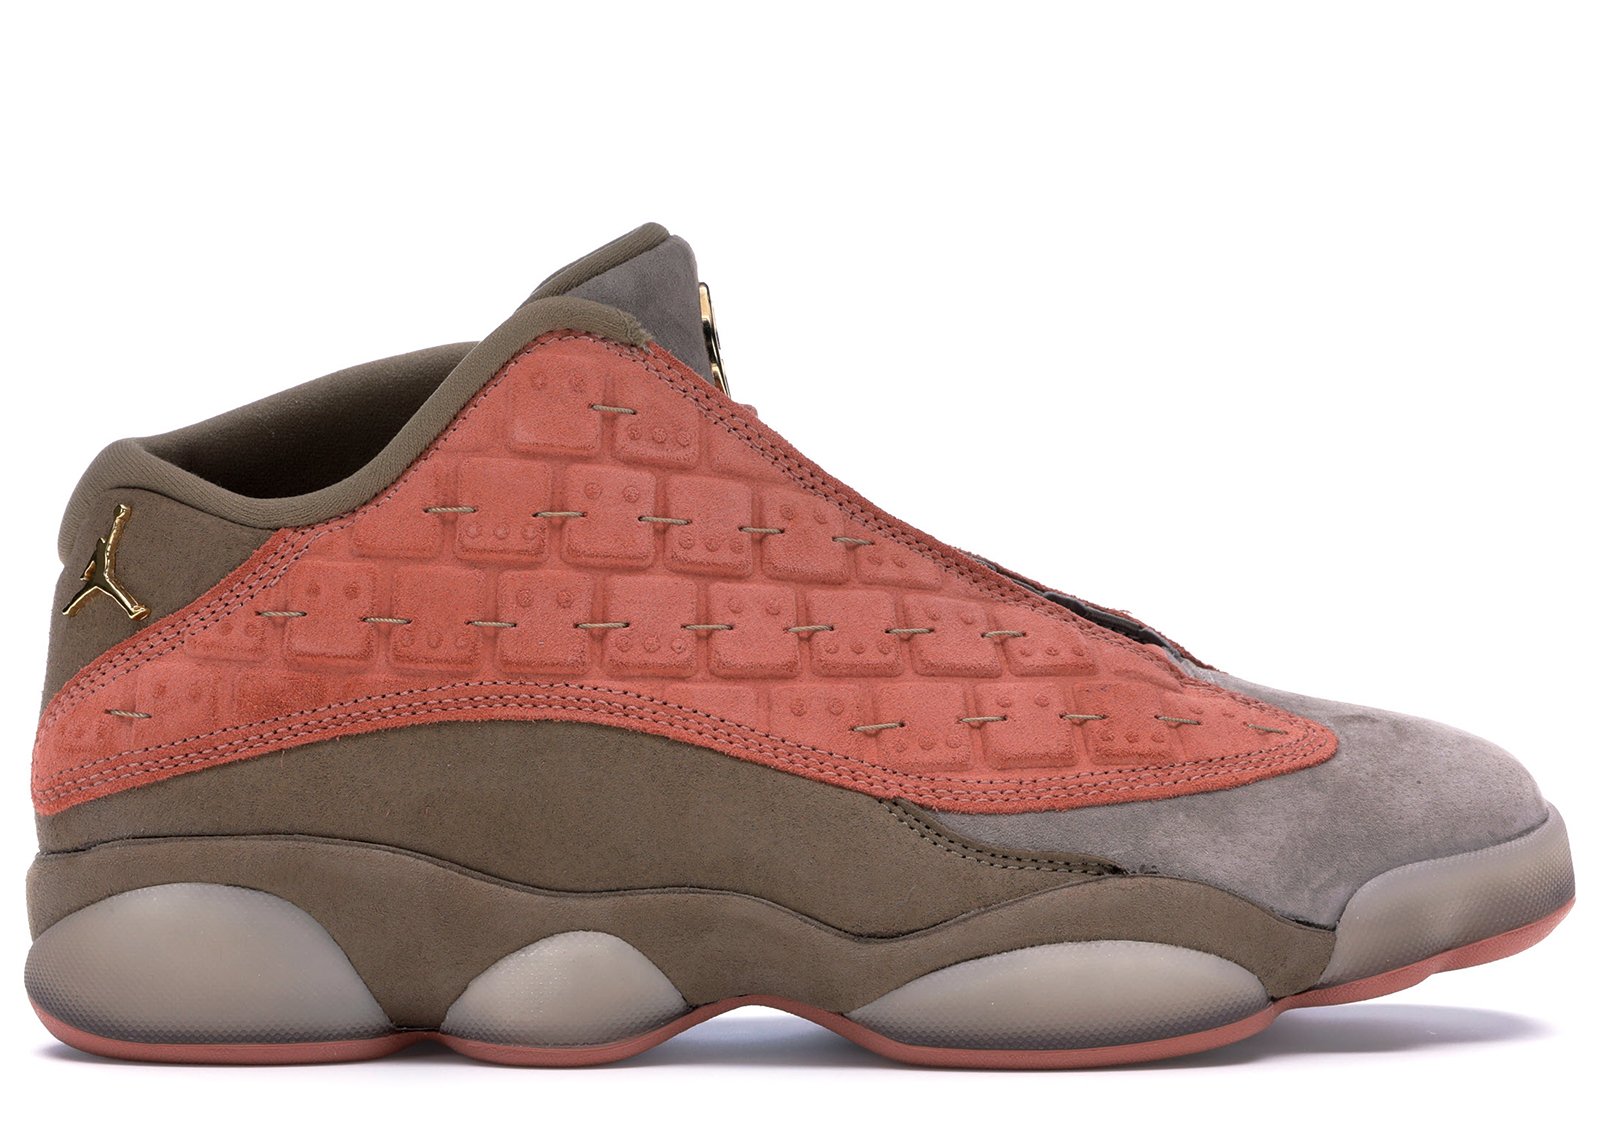 Jordan 13 Retro Low CLOT Sepia Stone sneakers